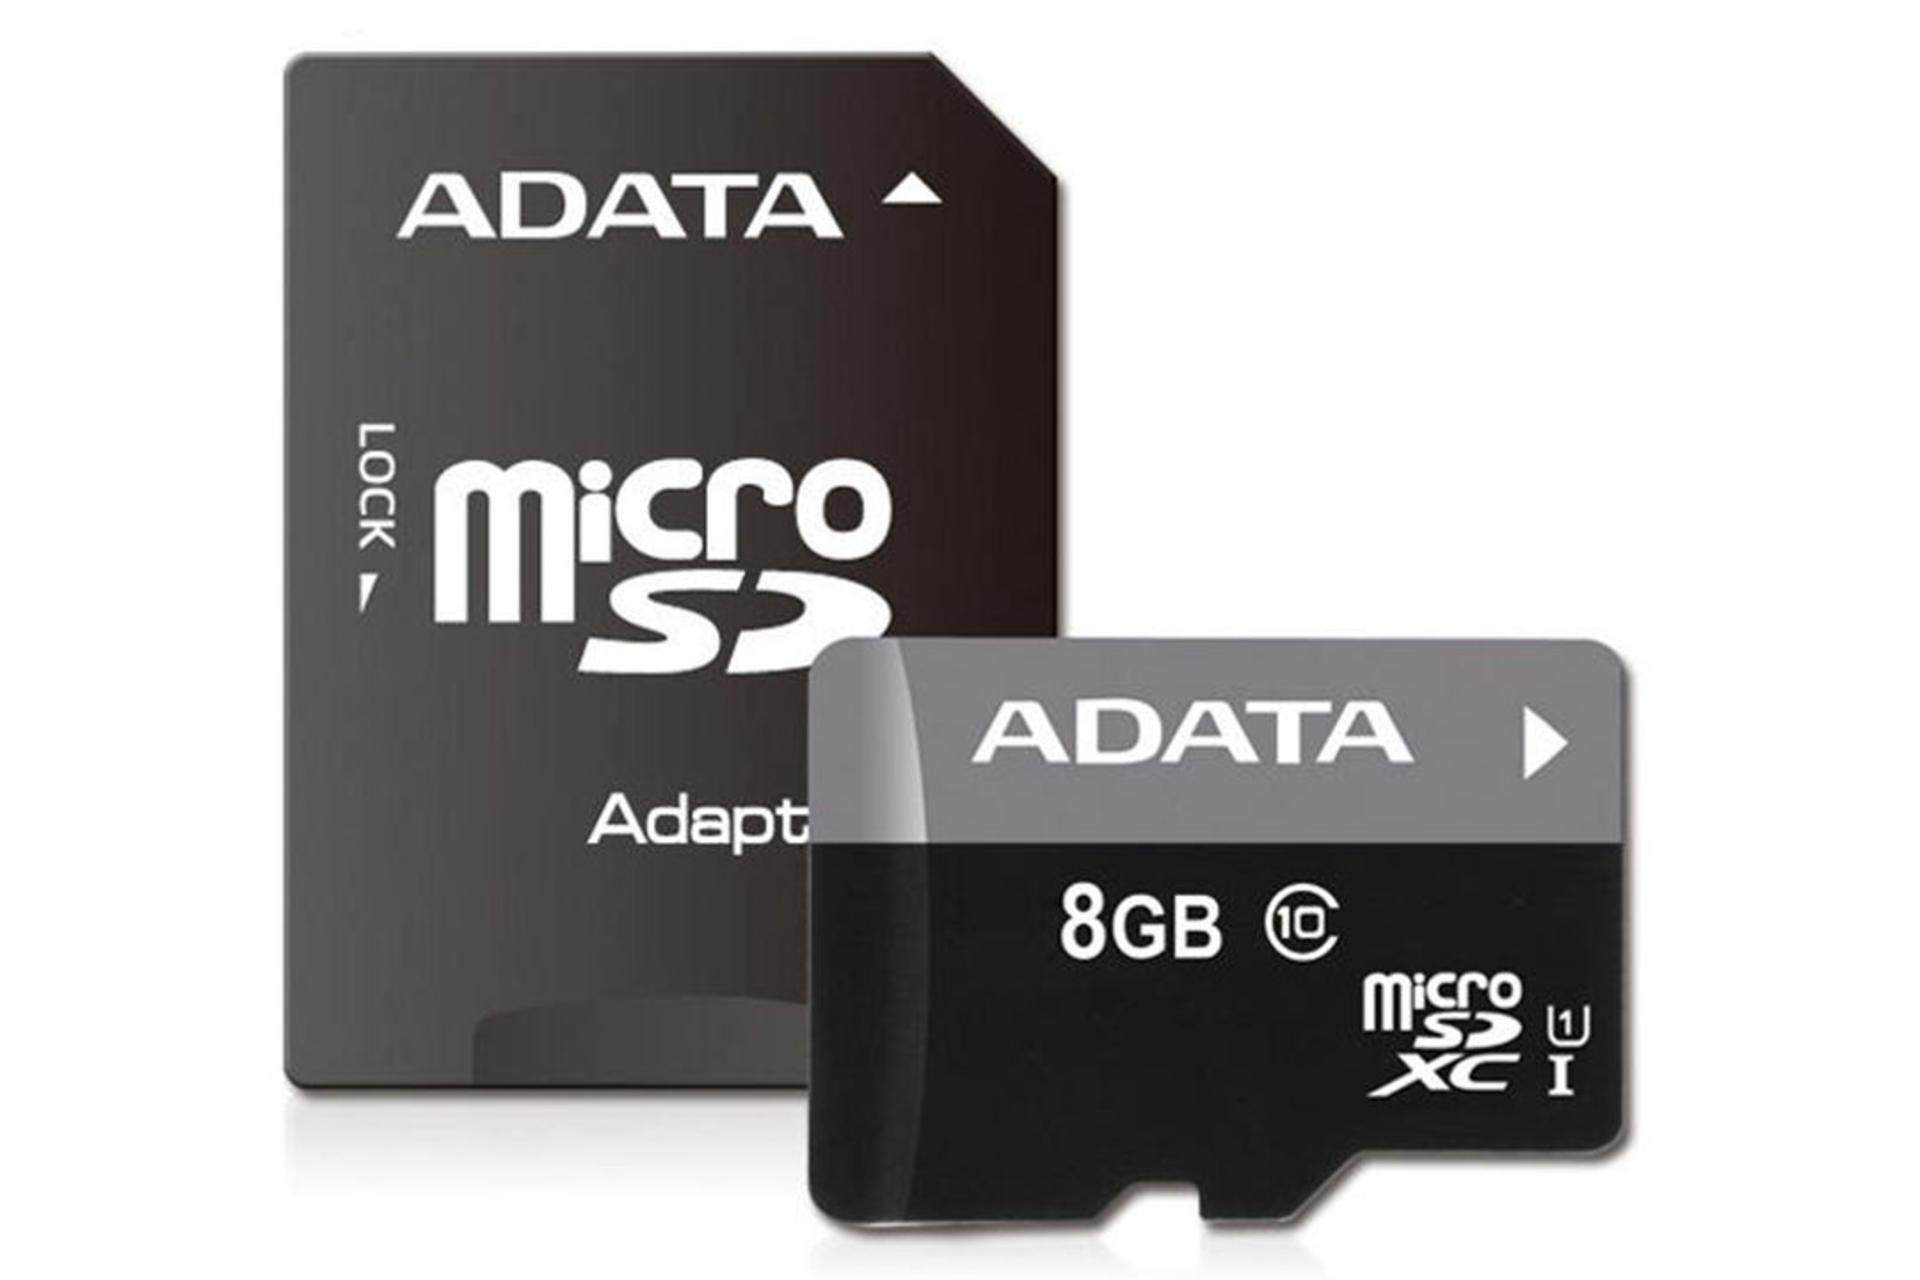 ADATA Premier microSDHC Class 10 UHS-I U1 8GB